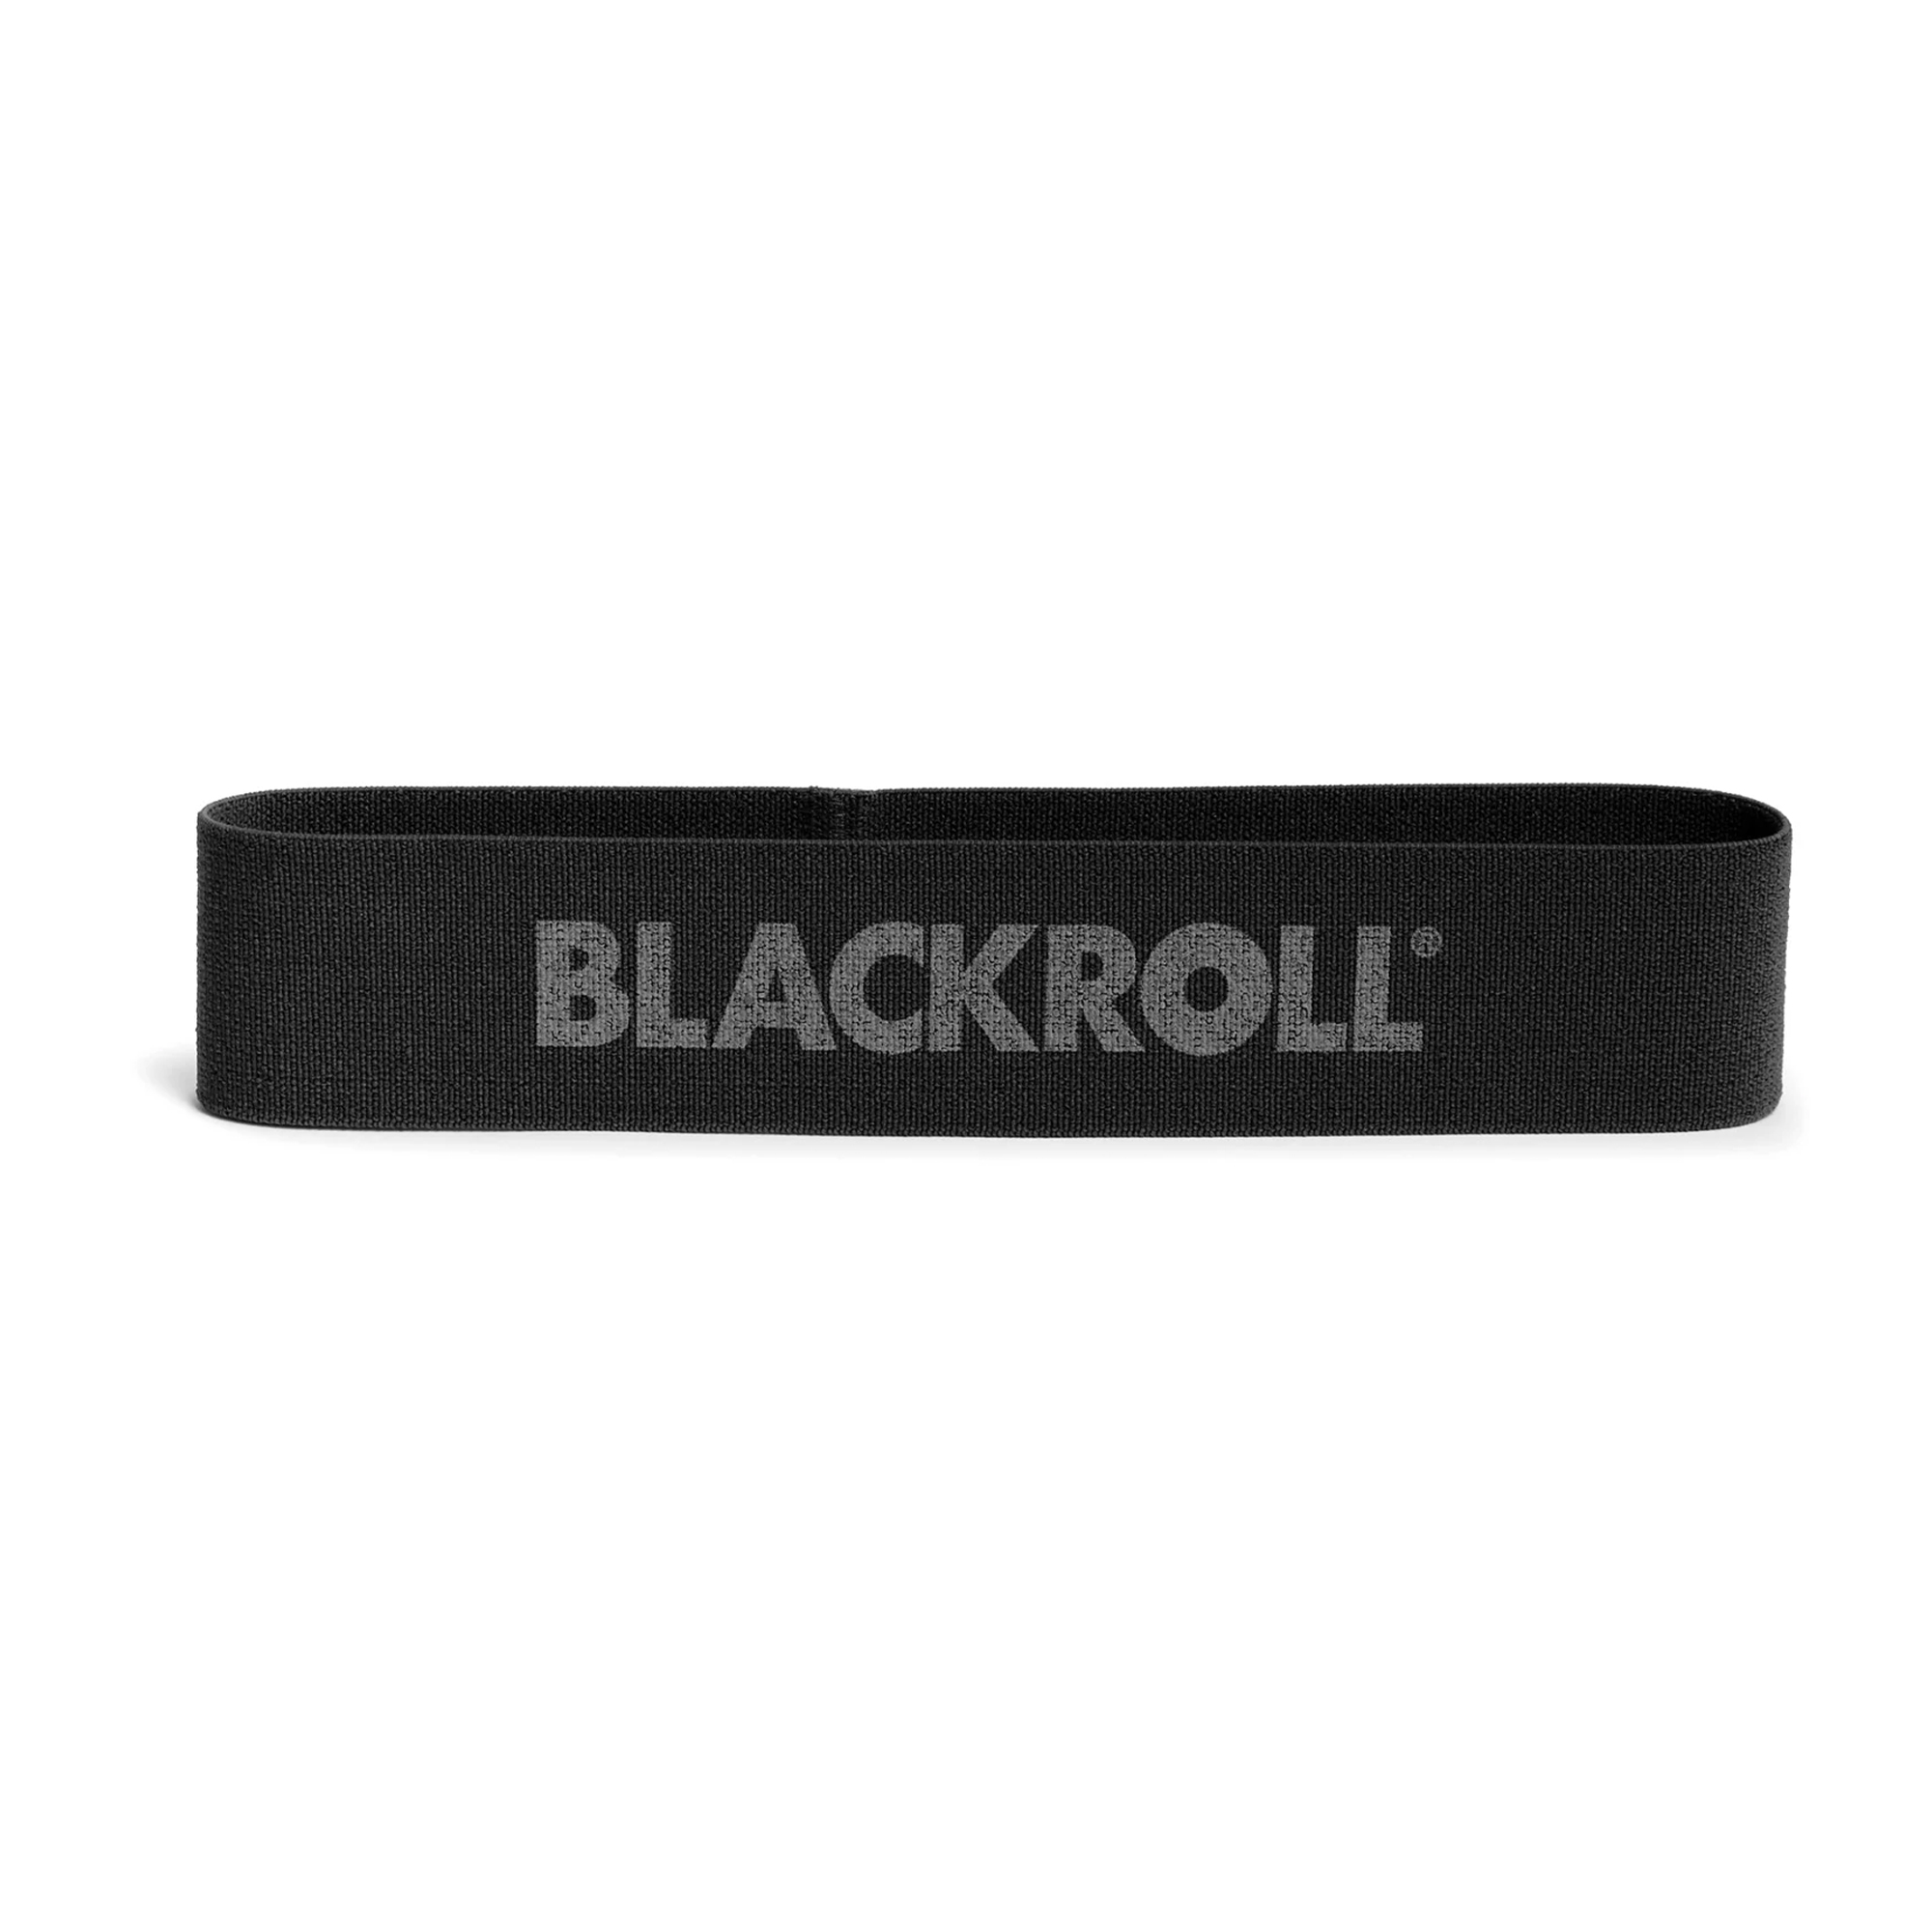 Blackroll Loop Band Træningselastik - Ekstra hård (30 cm)